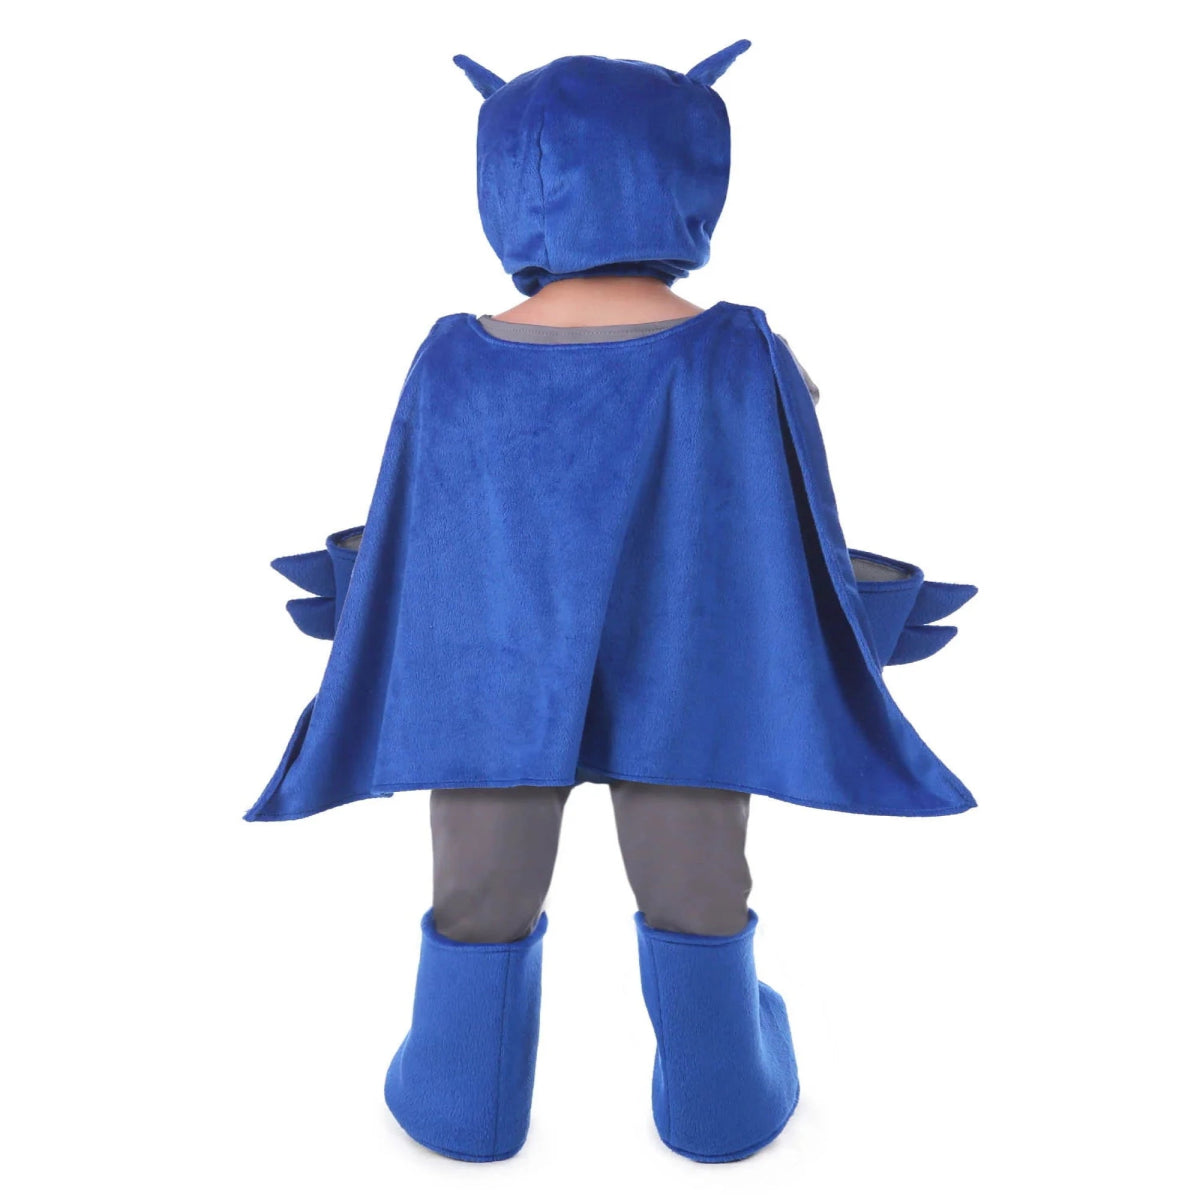 Cuddly Batman Toddler Costume - worldclasscostumes